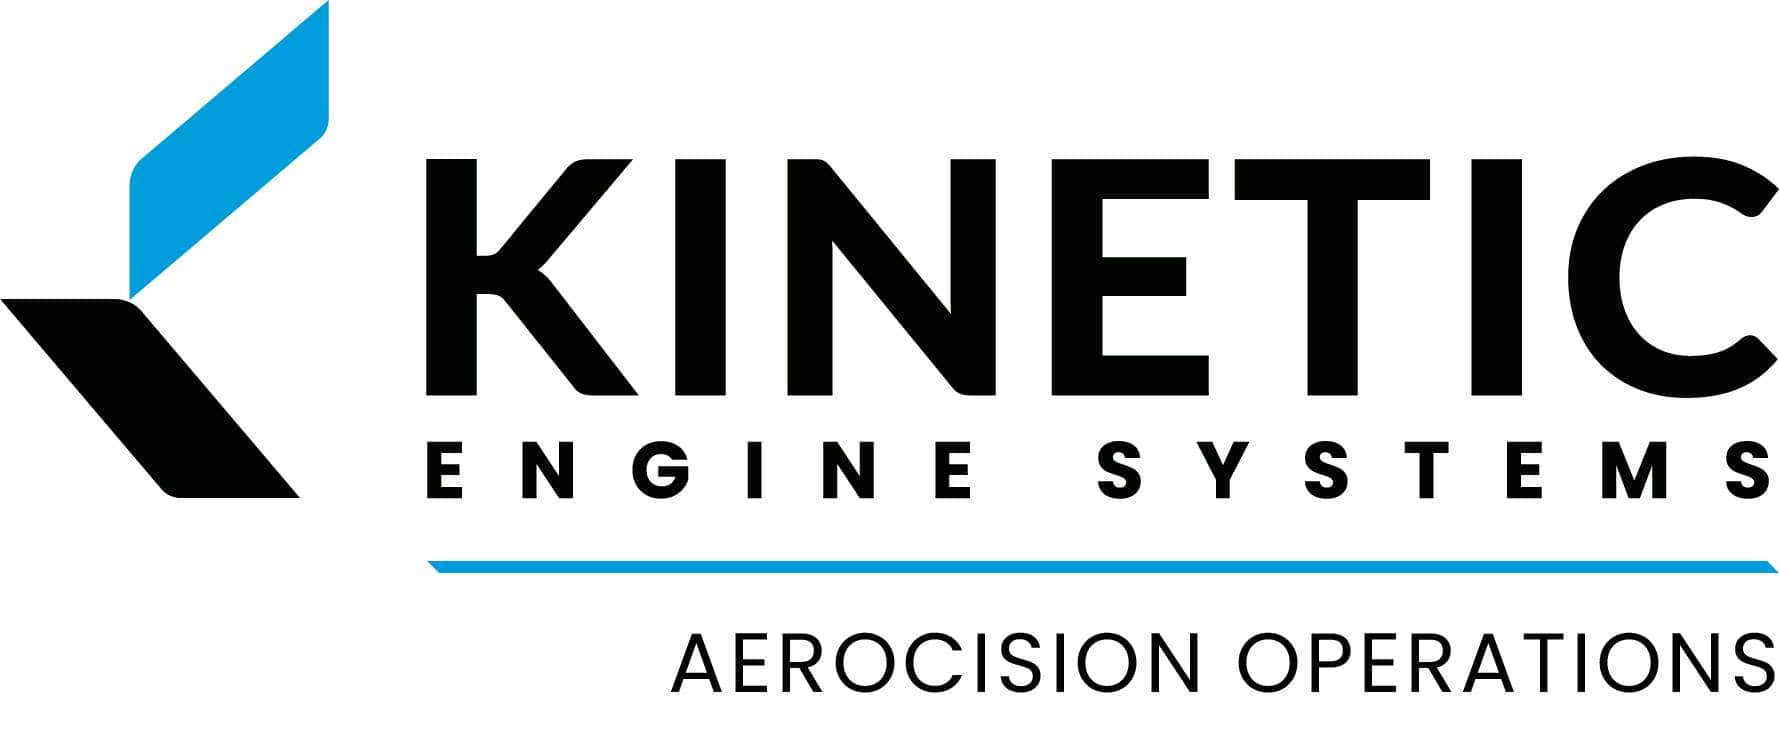 Kinetic Engine Systems, Aerocision Operation logo